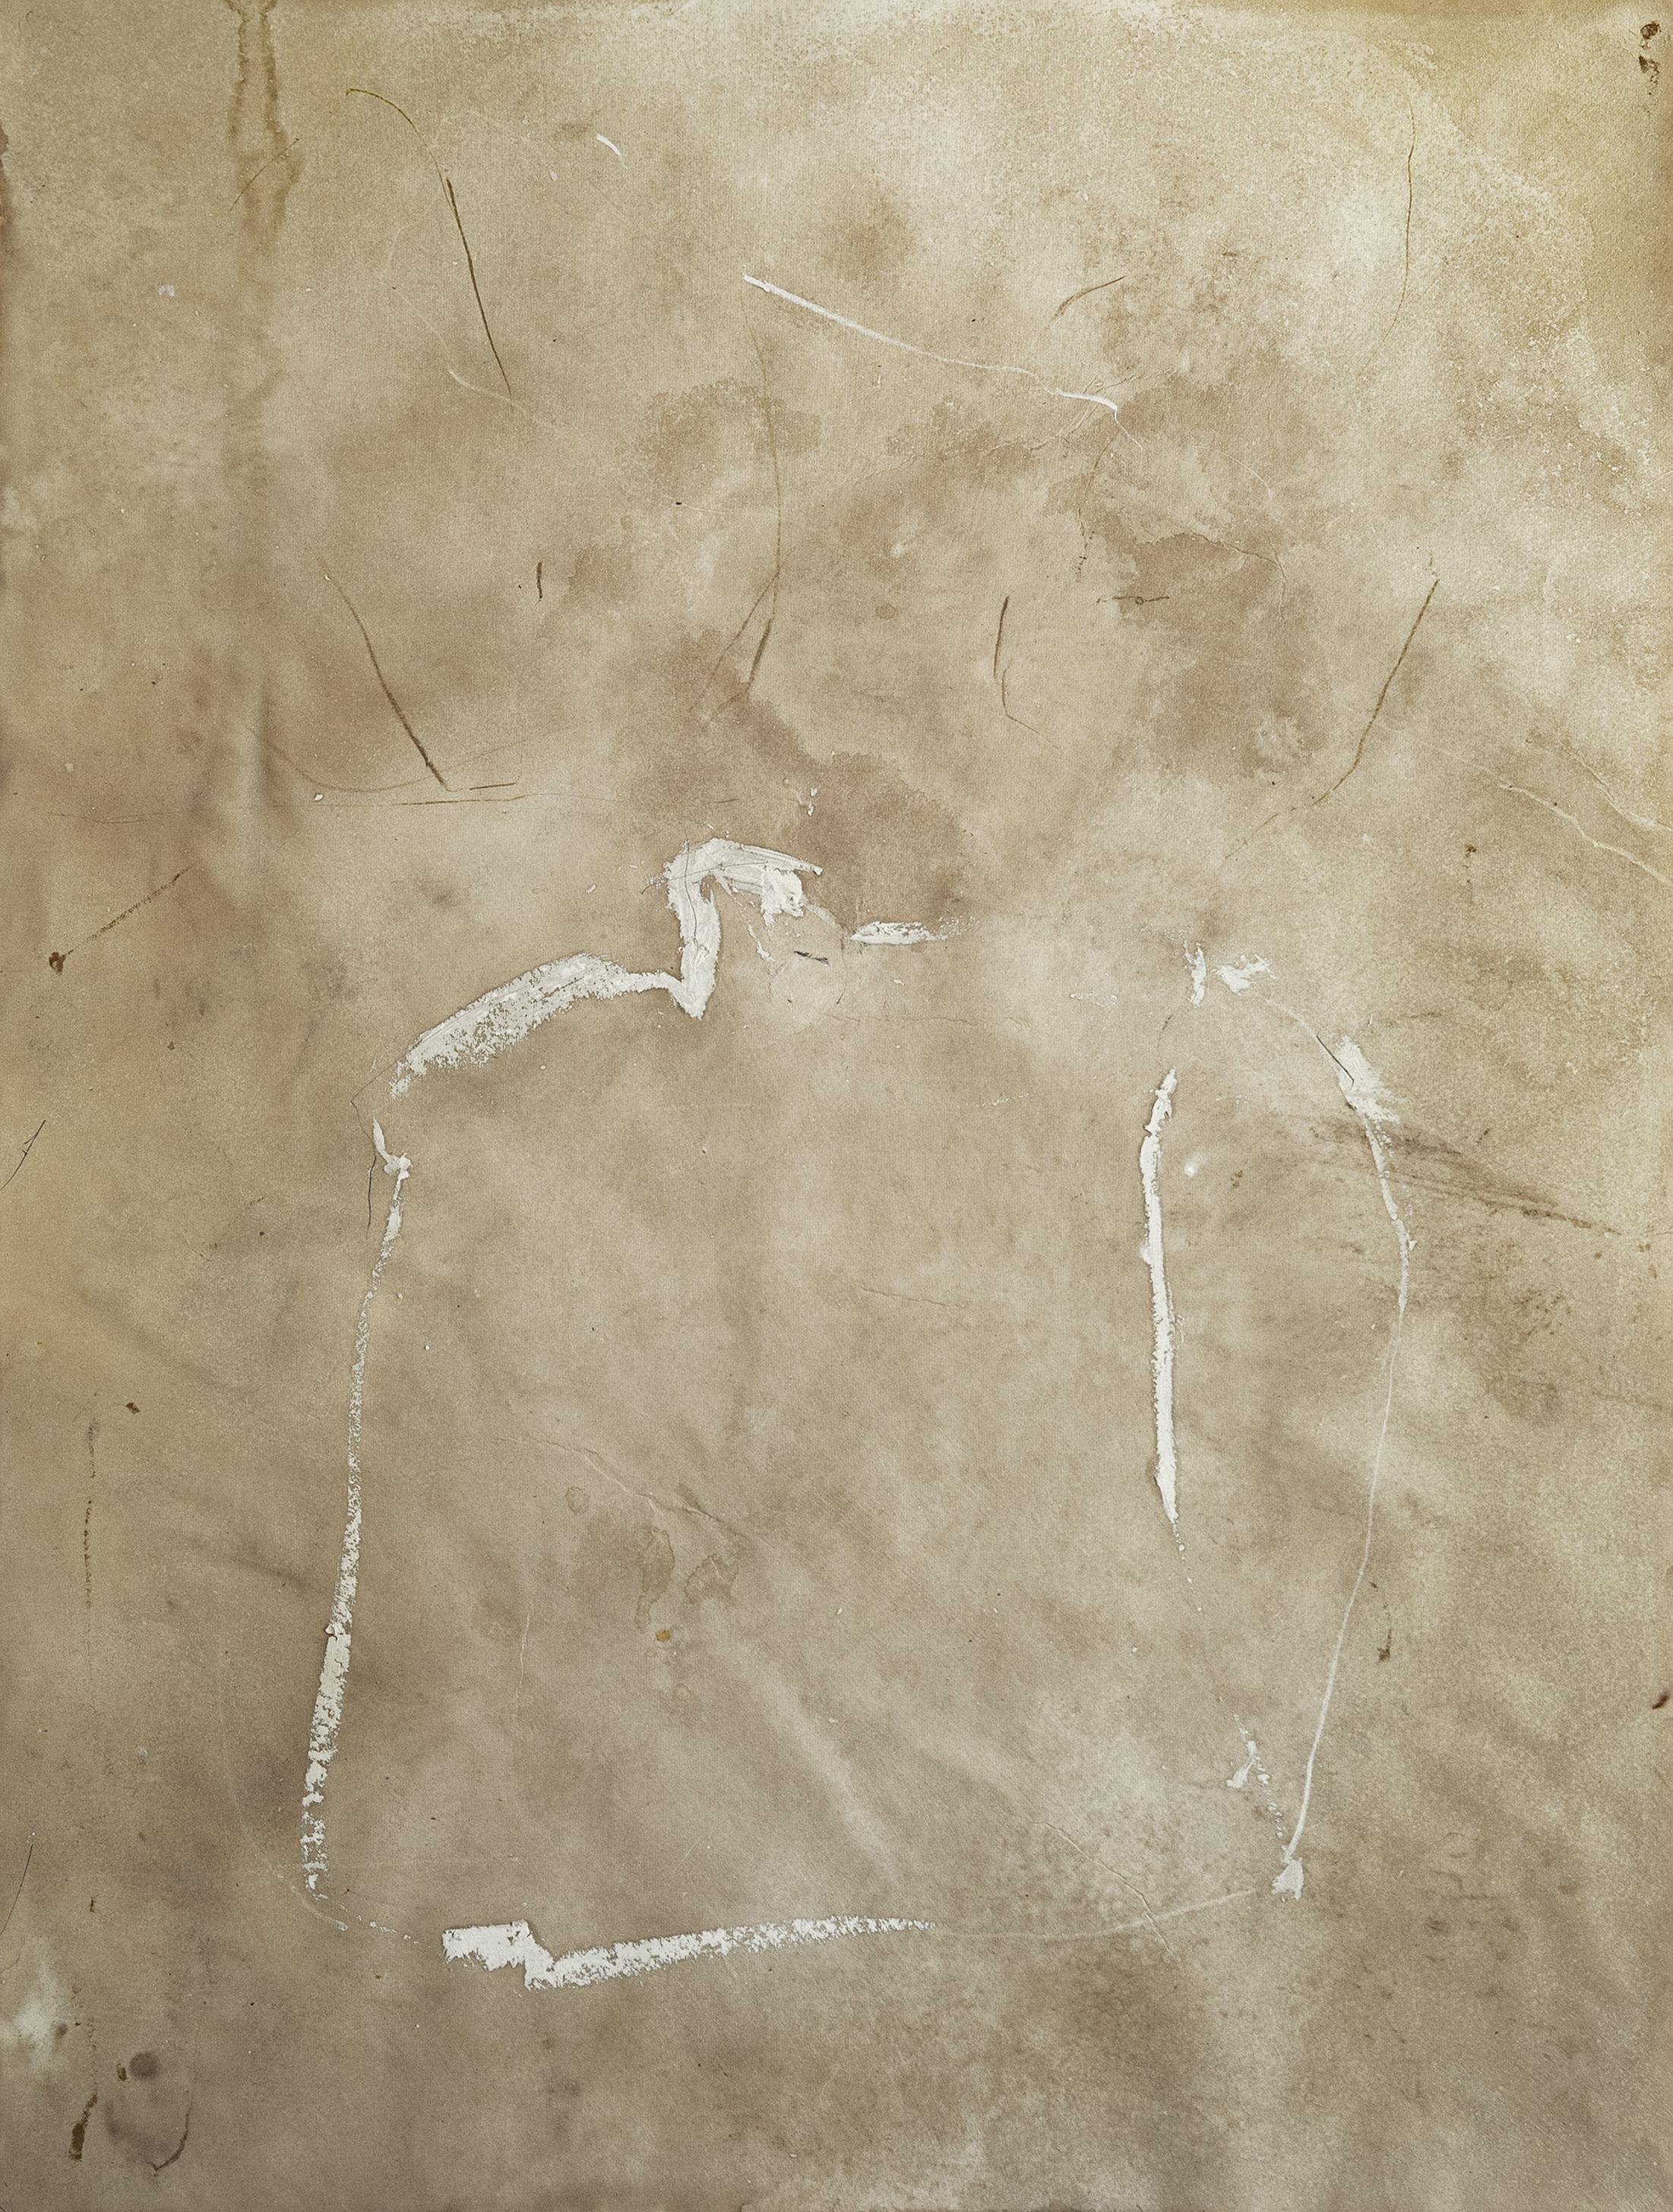 On Hansen Abstract Painting – Wo war ich jetzt?. Abstraktes Mixed-Media-Gemälde  zu Awagami  Papier